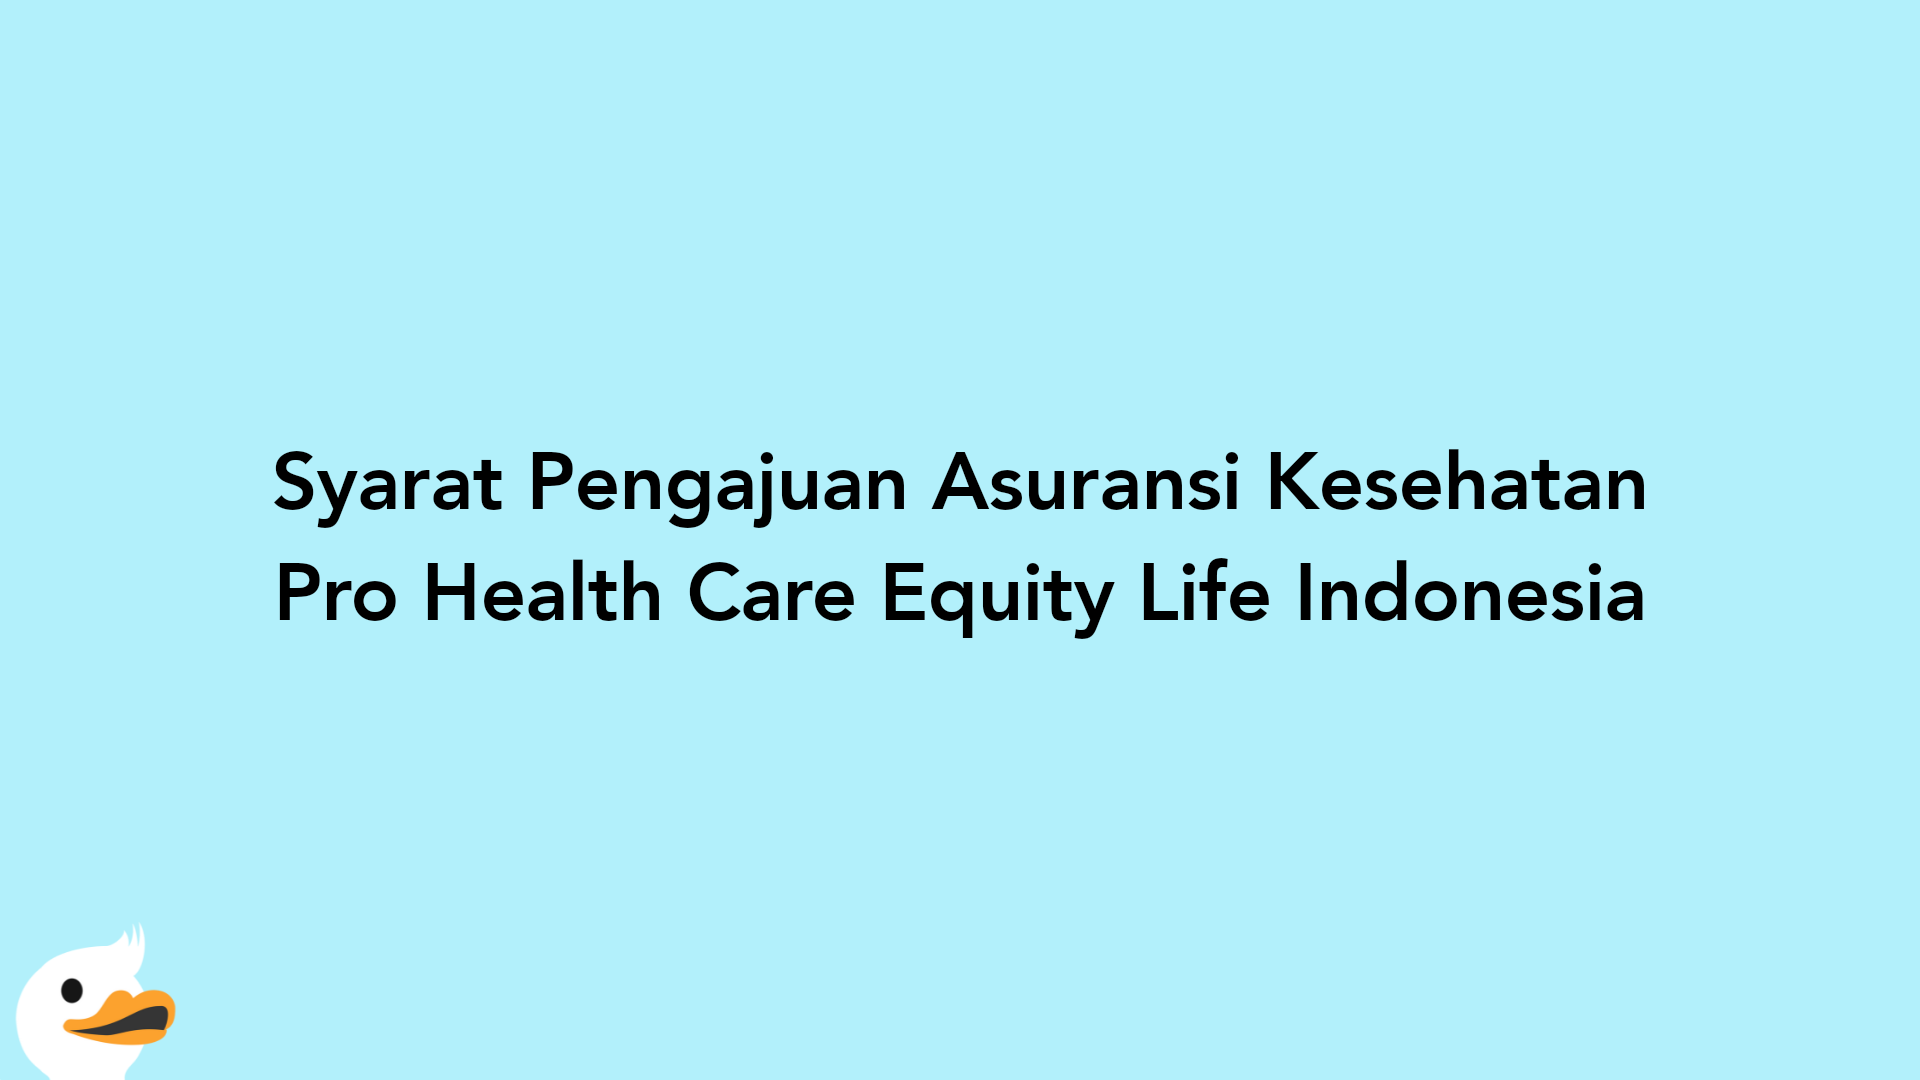 Syarat Pengajuan Asuransi Kesehatan Pro Health Care Equity Life Indonesia